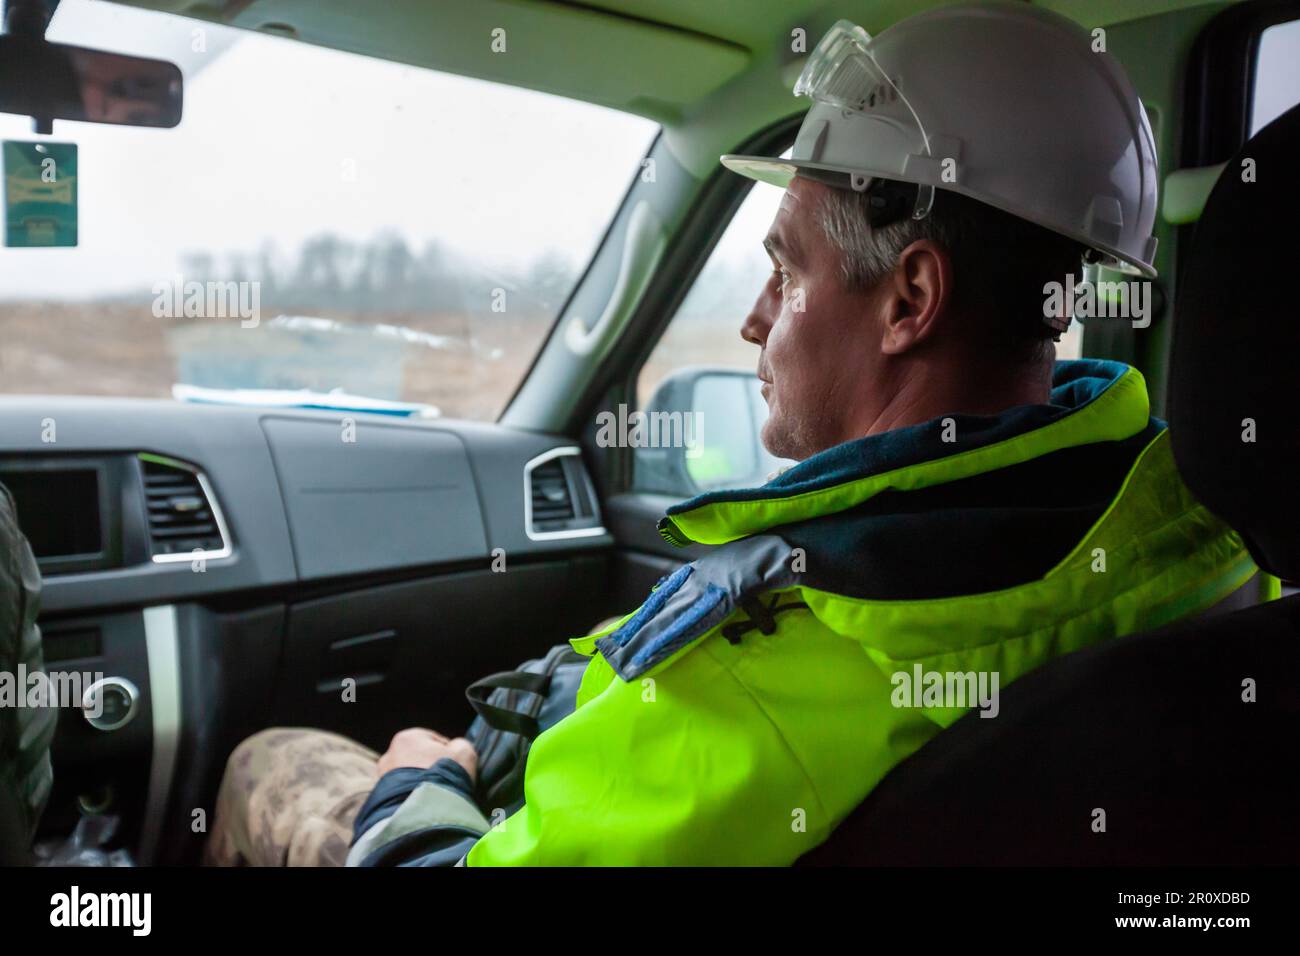 Ust-Luga, Leningrado oblast, Russia - 16 novembre 2021: Supervisore ingegnere in macchina Foto Stock